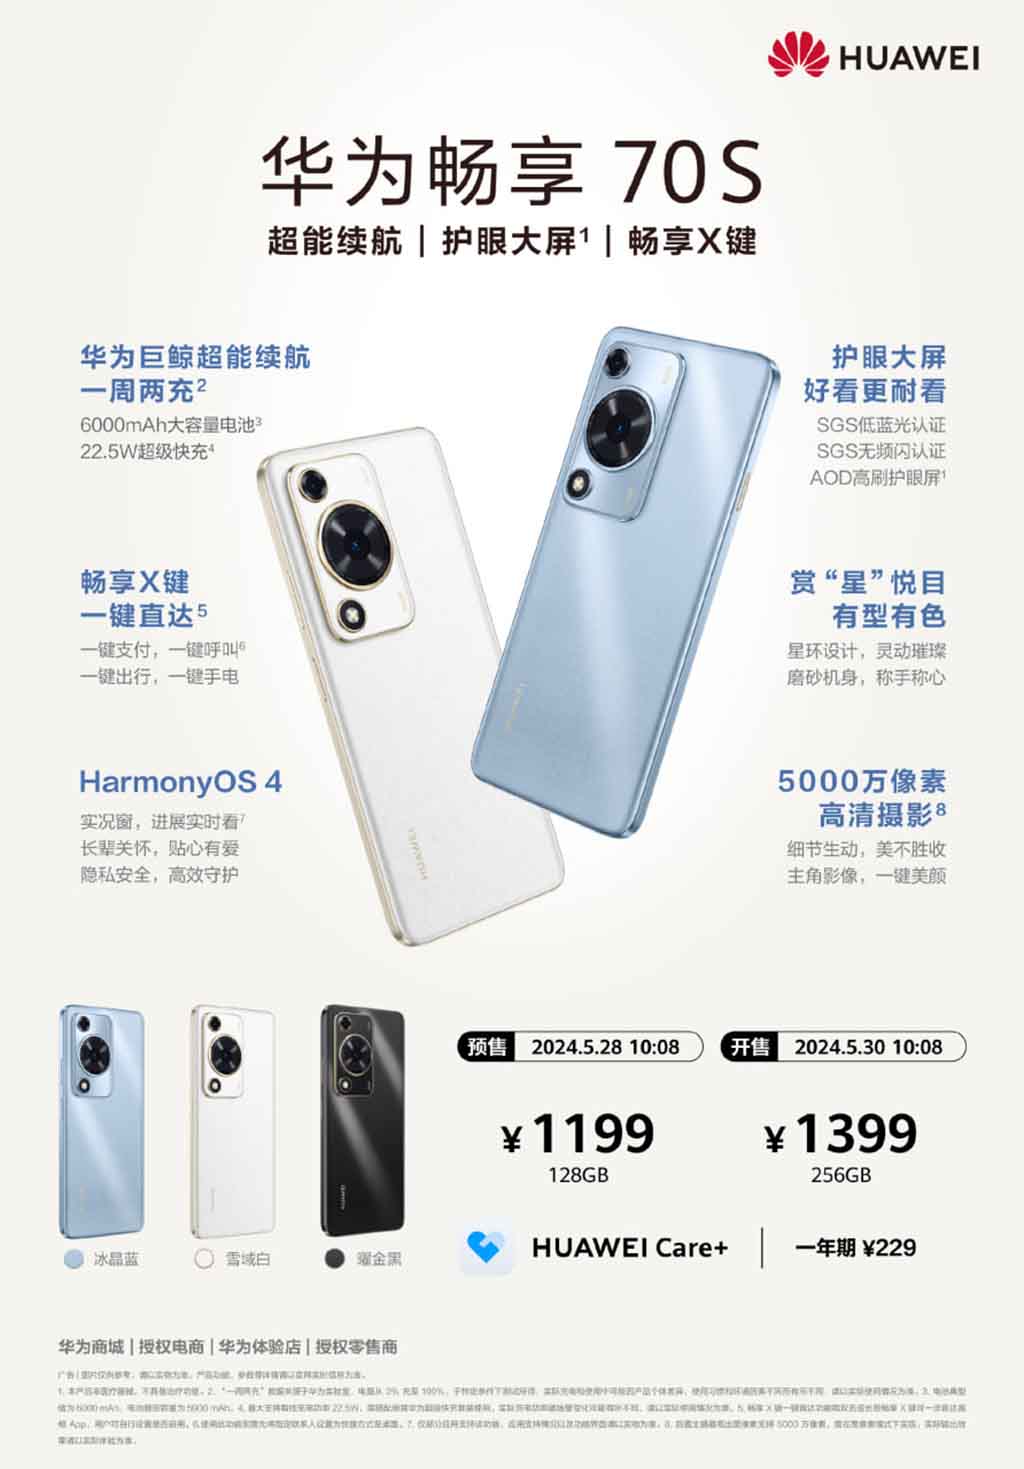 Huawei Enjoy 70S pre-sale